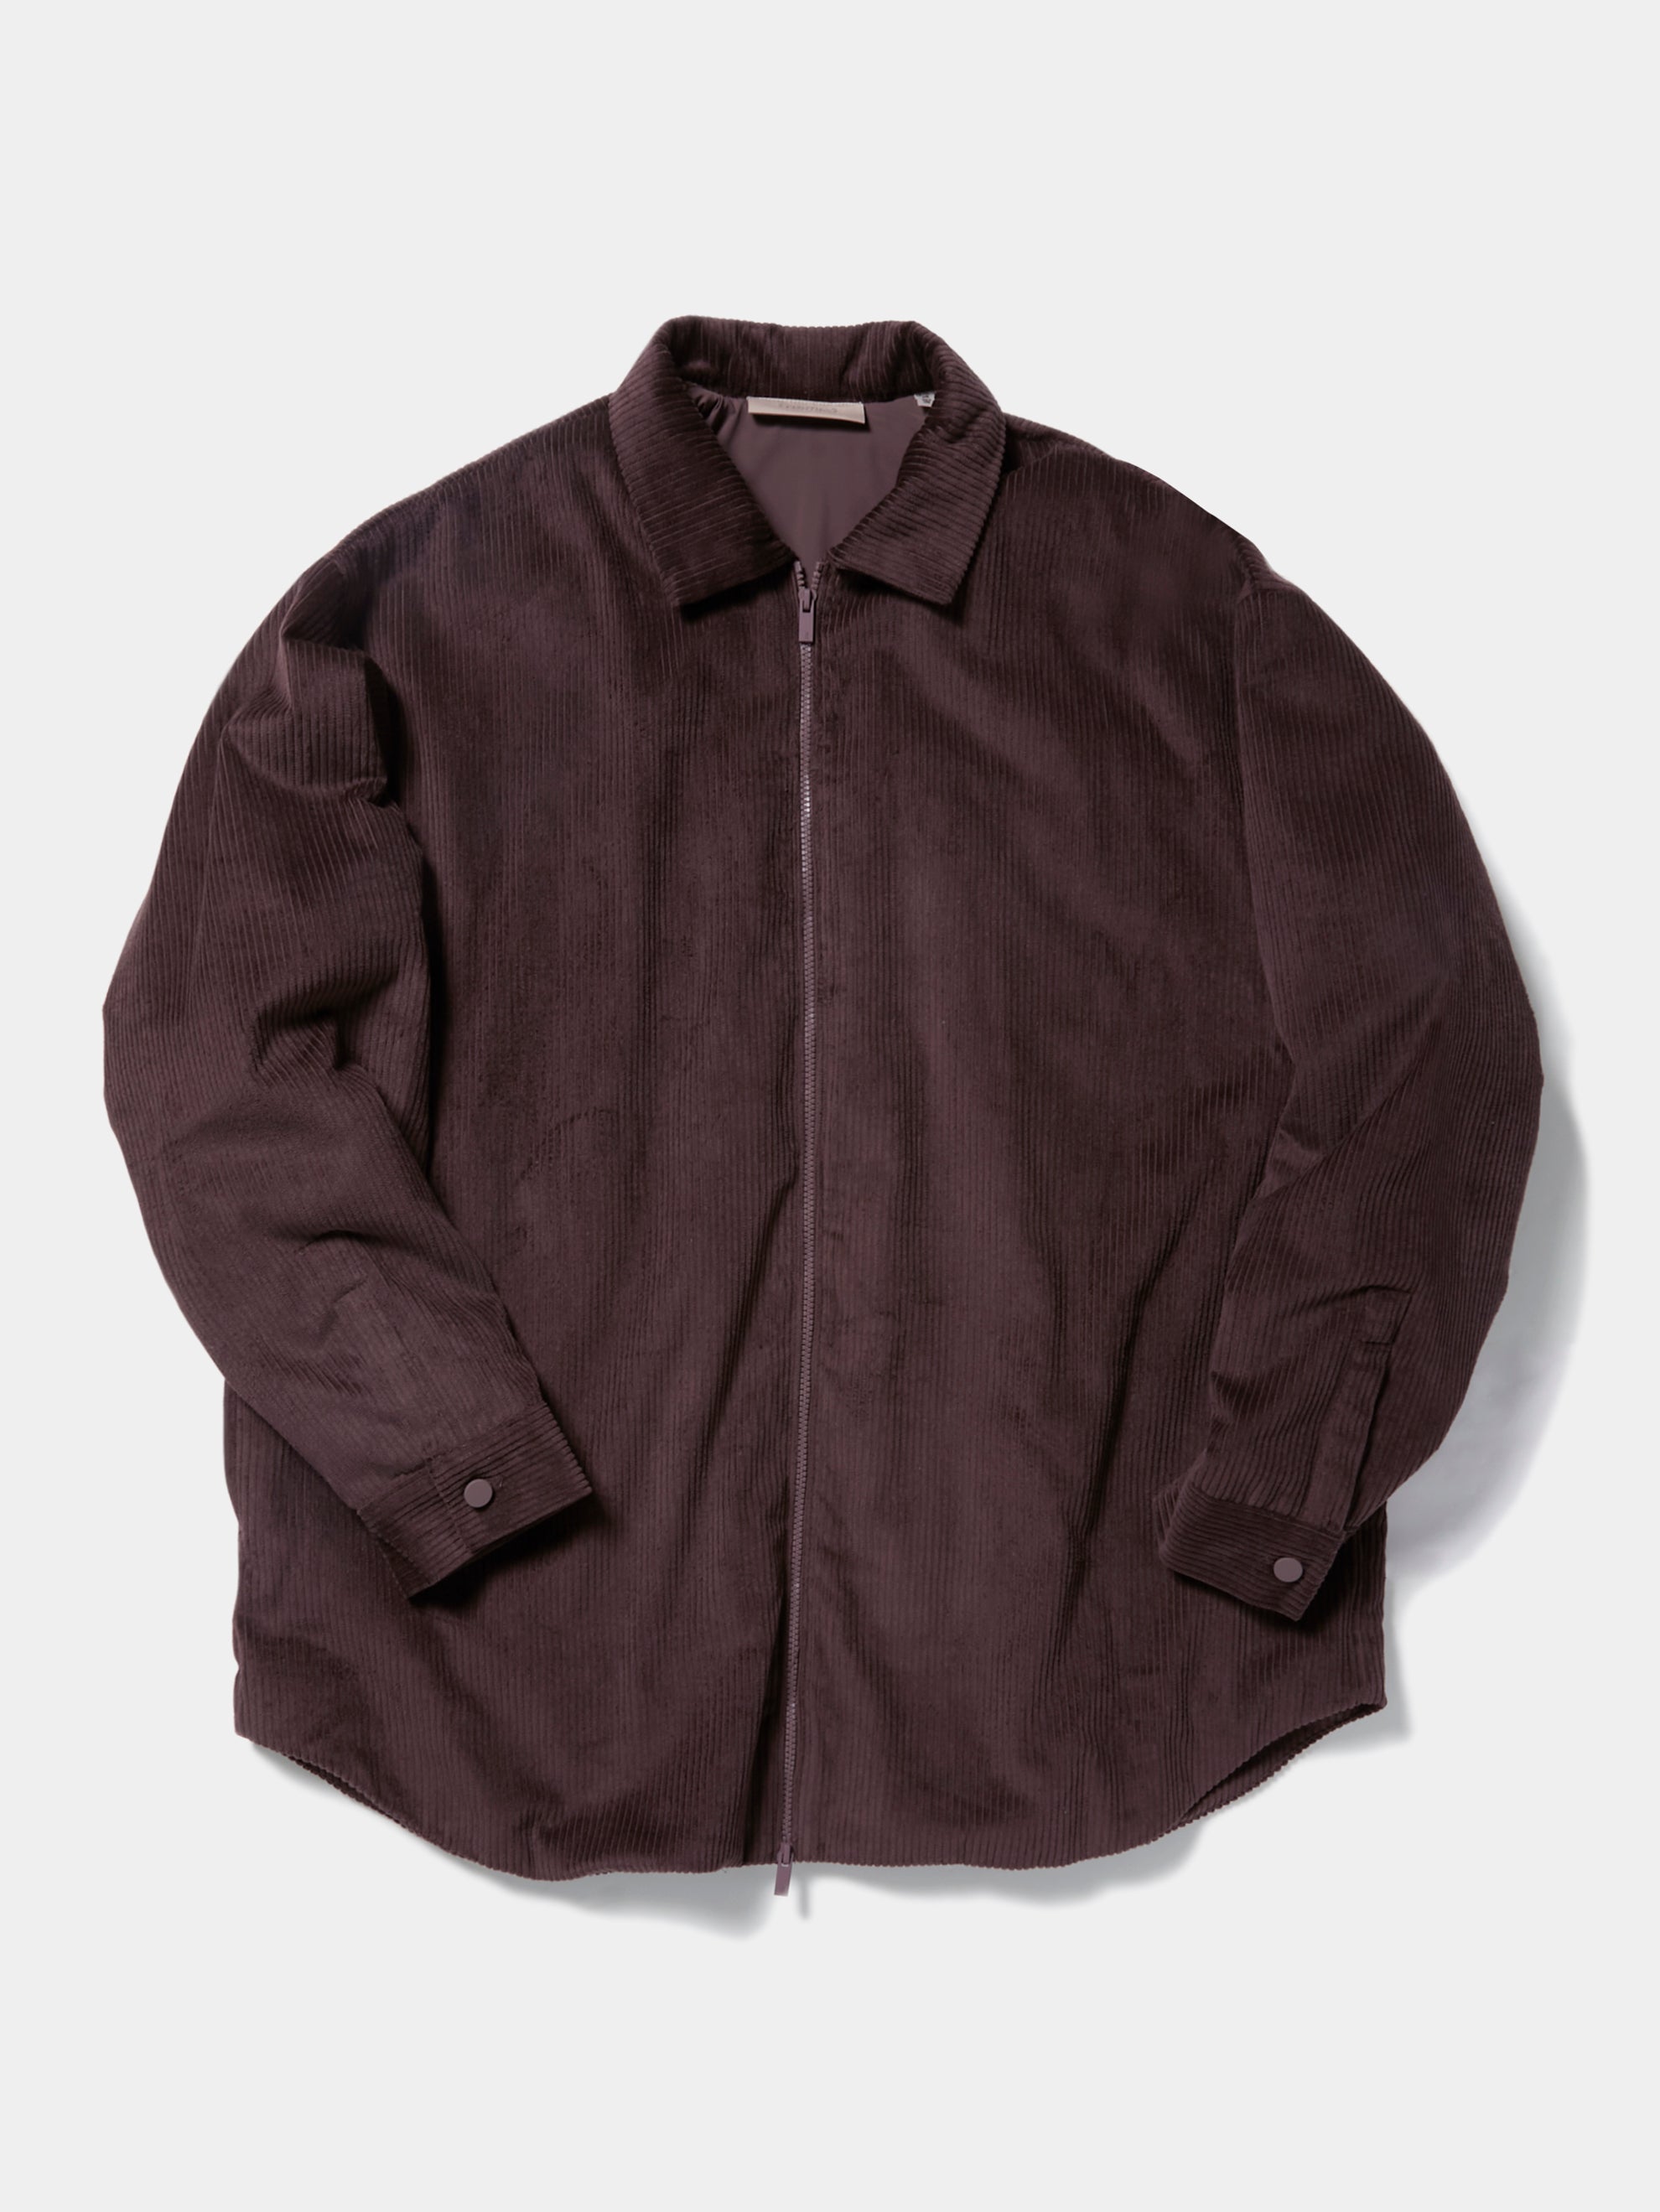 Shirt Jacket (Plum)